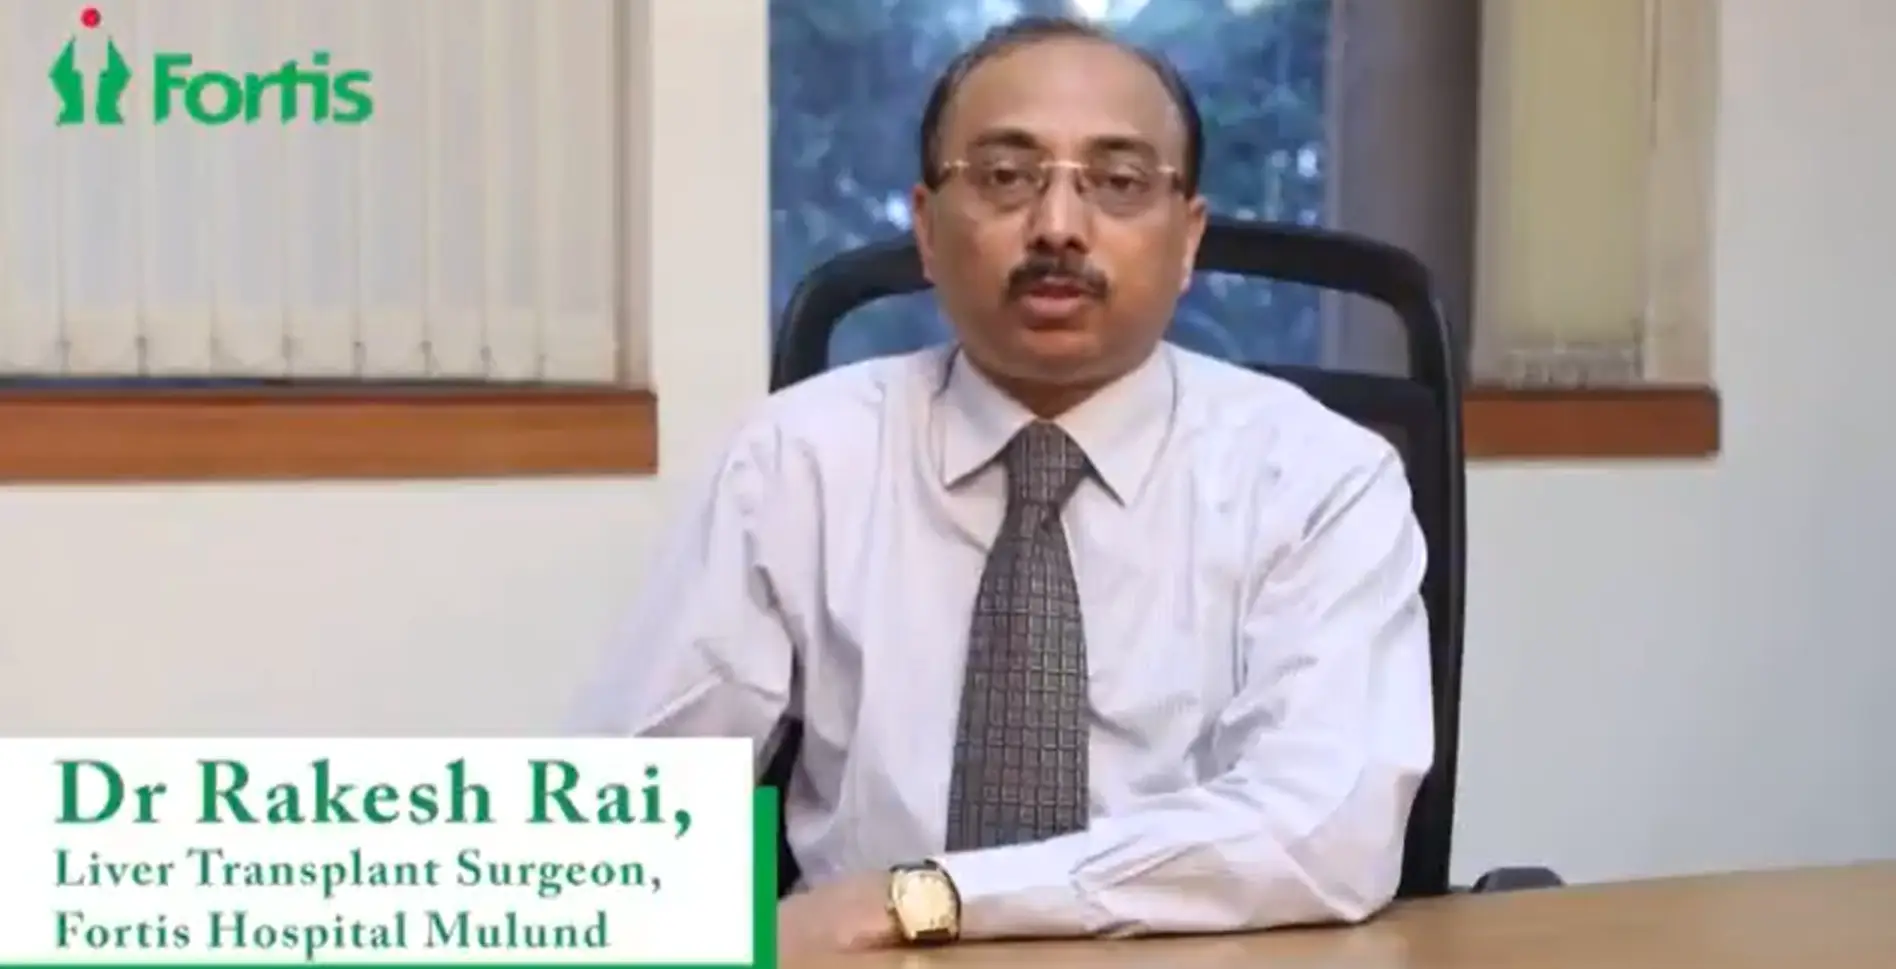 Ask the expert: Interview with Dr. Rakesh Rai regarding liver transplant surgeon